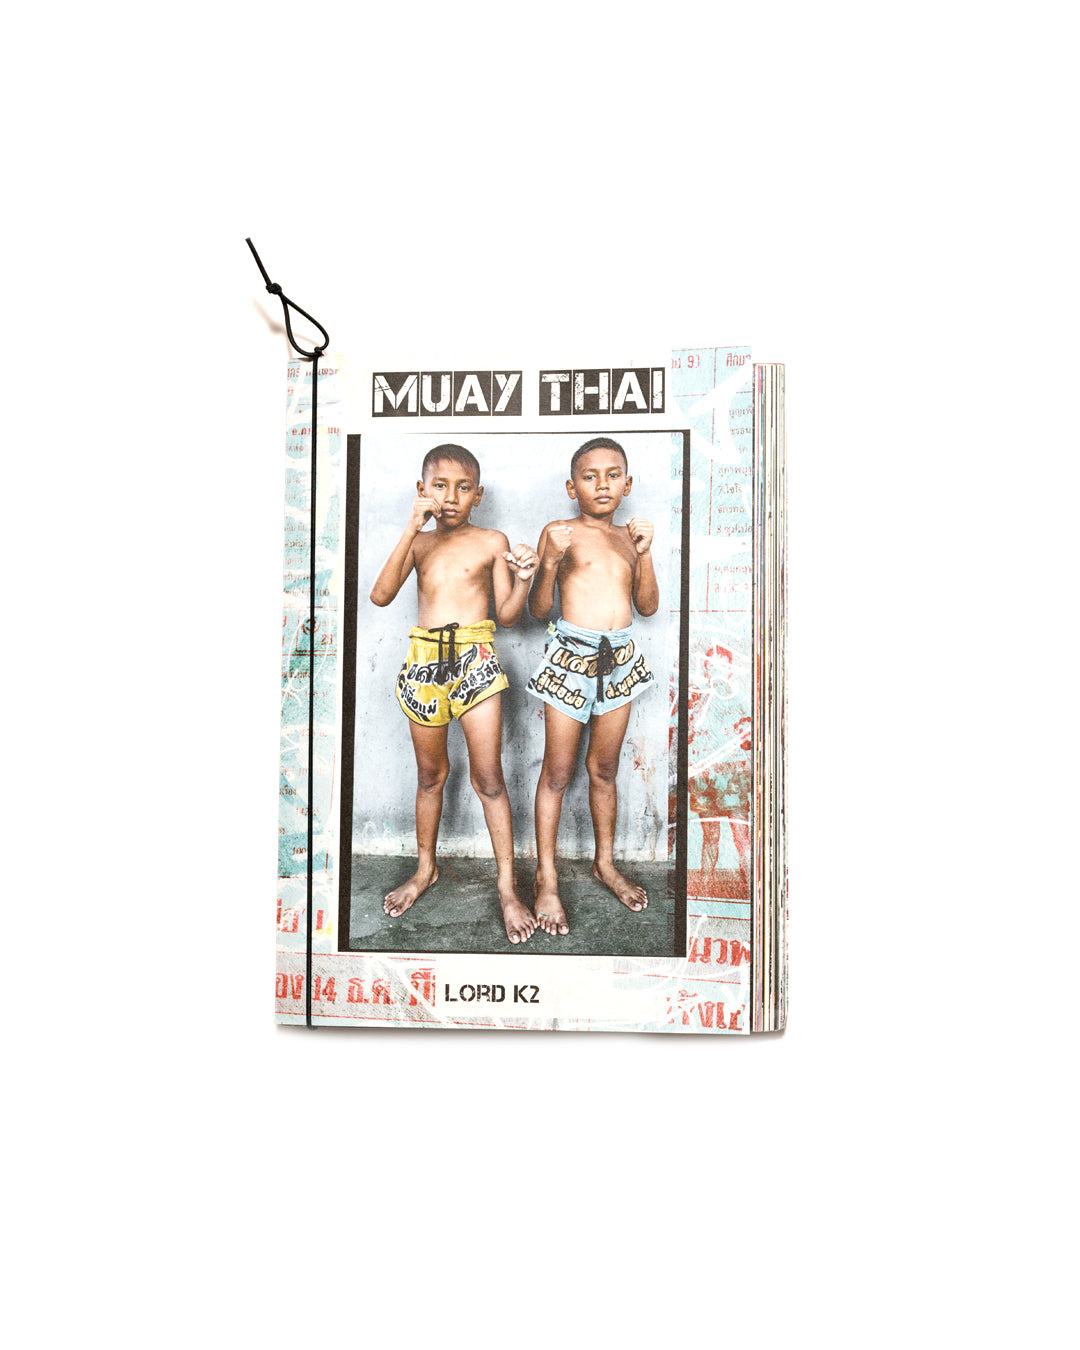 Muay Thai - LORD K2